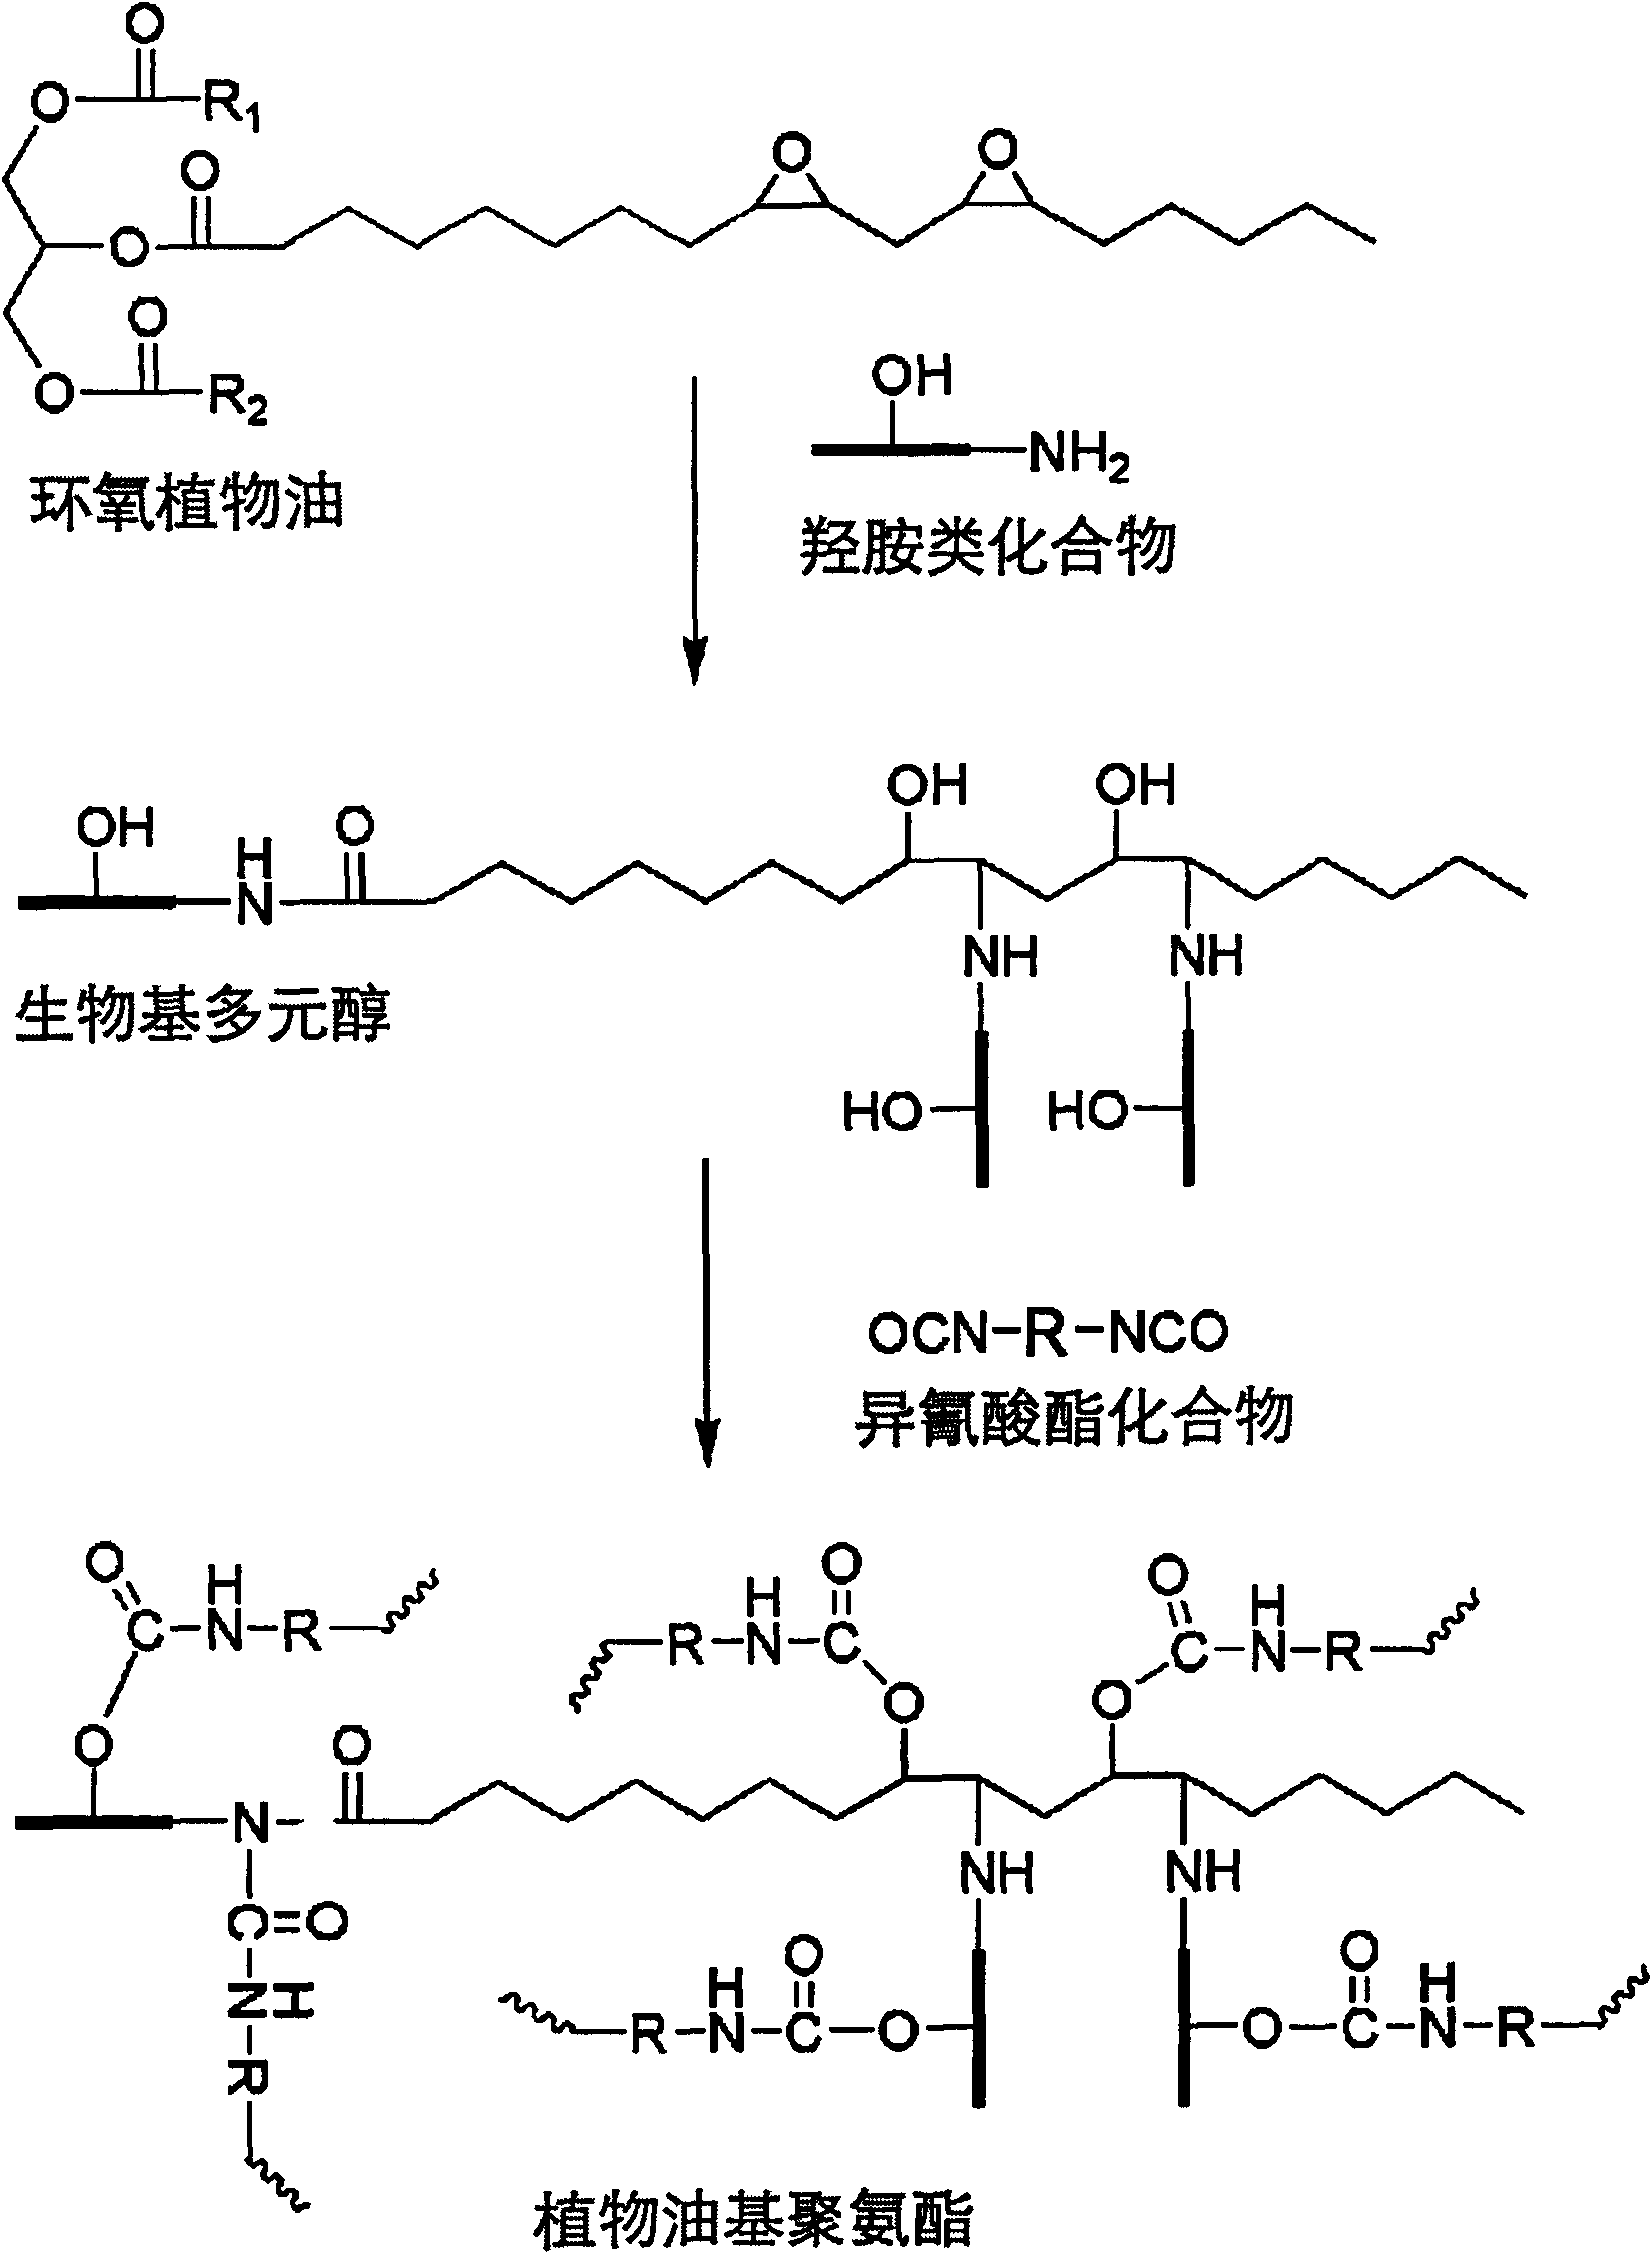 Preparation method of organism-based polyalcohol based on epoxidized plant oil and hydroxylamine compound